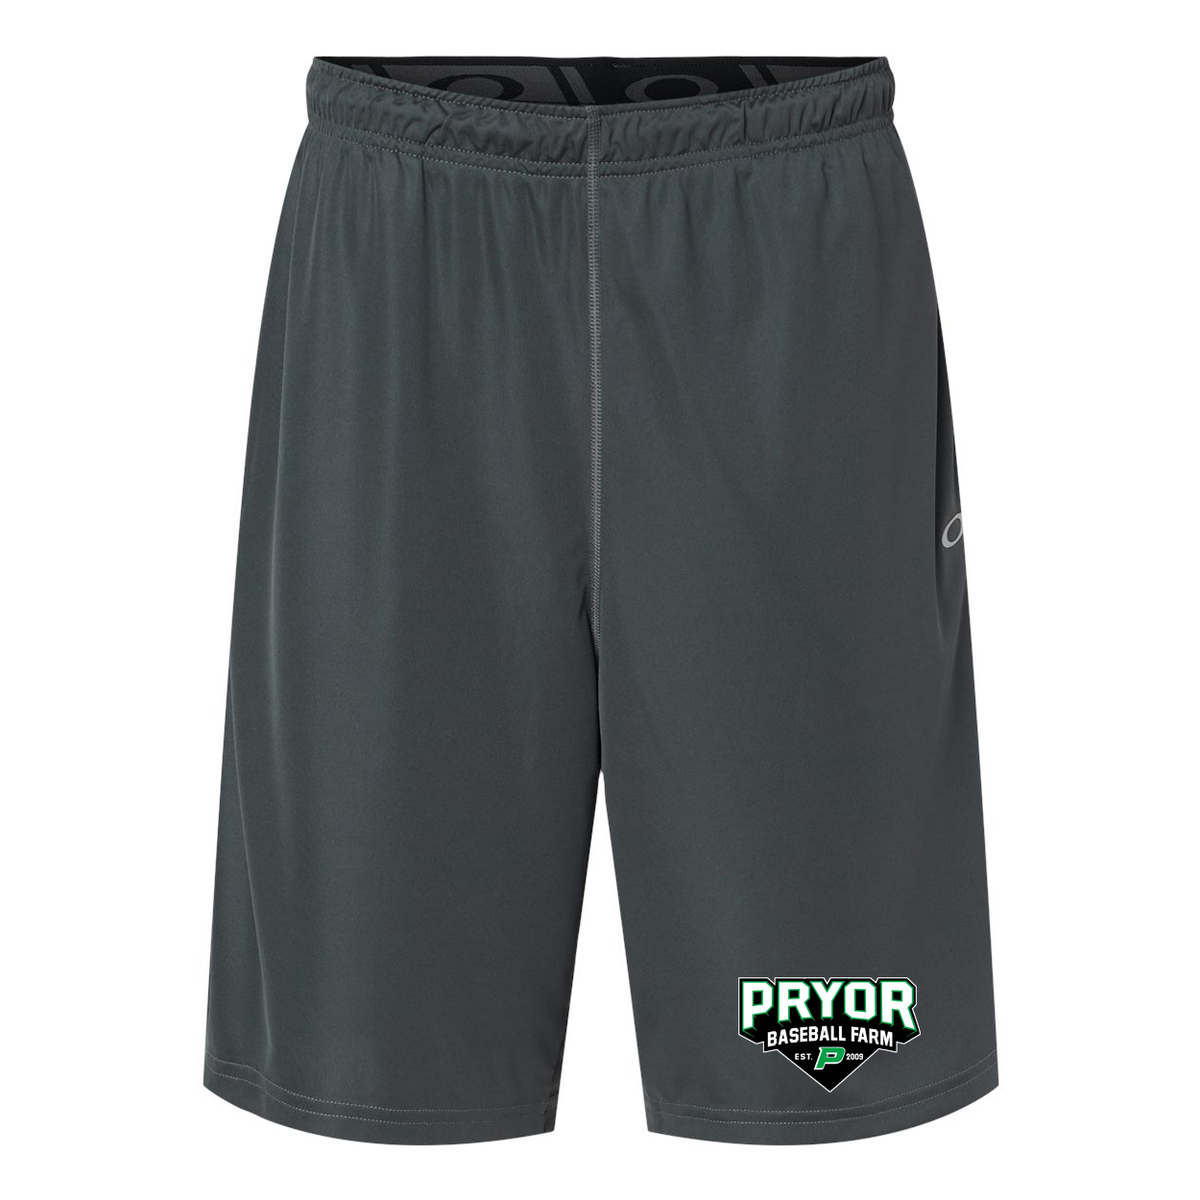 Pryor Baseball Farm Oakley Hydrolix Shorts